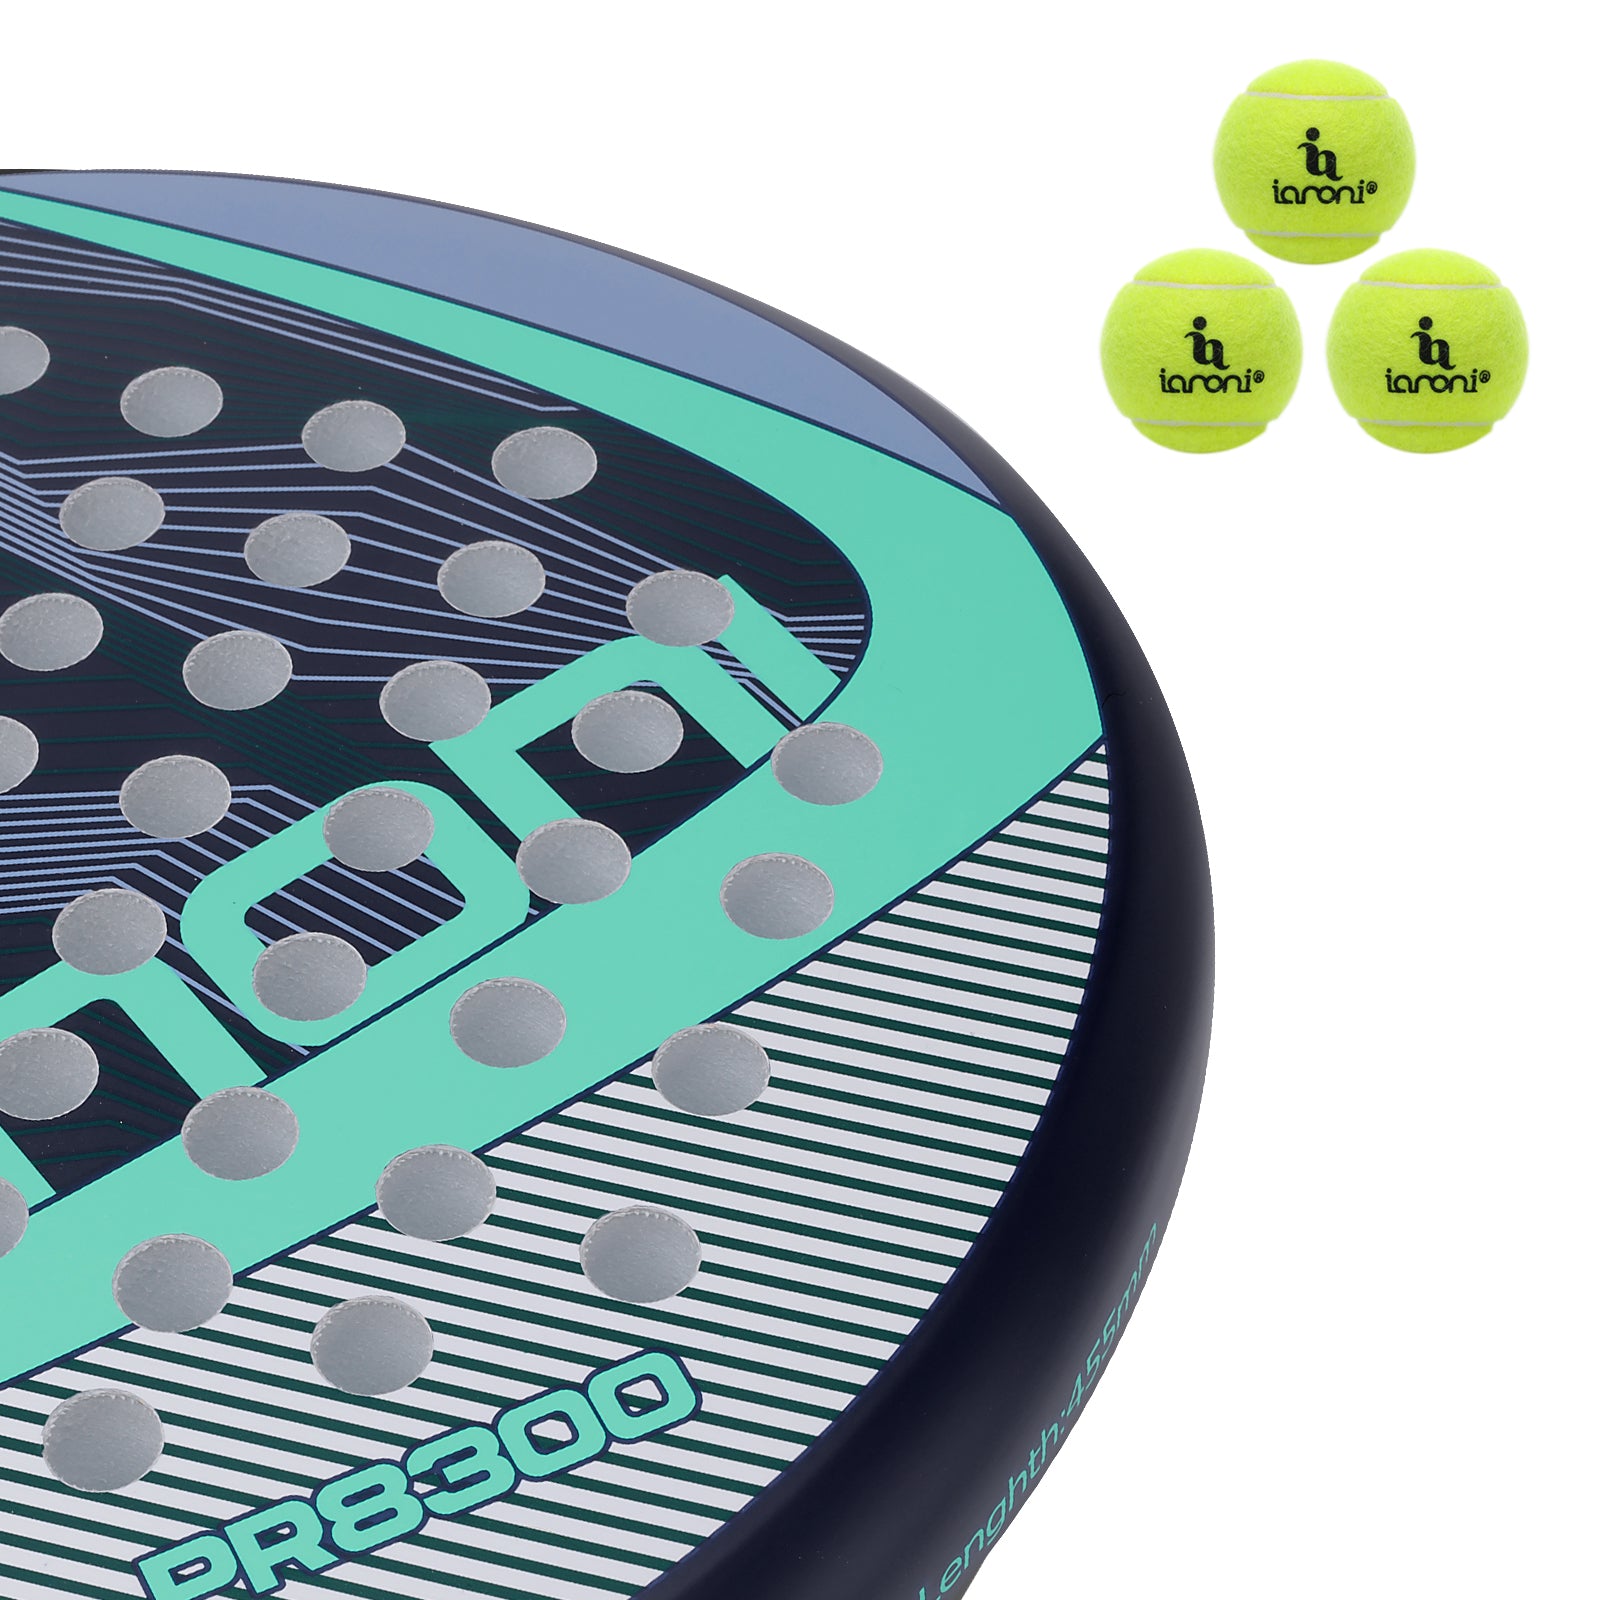 ianoni Paddle Tennis Racket Carbon Fiber Surface with EVA Memory Flex –  IANONI